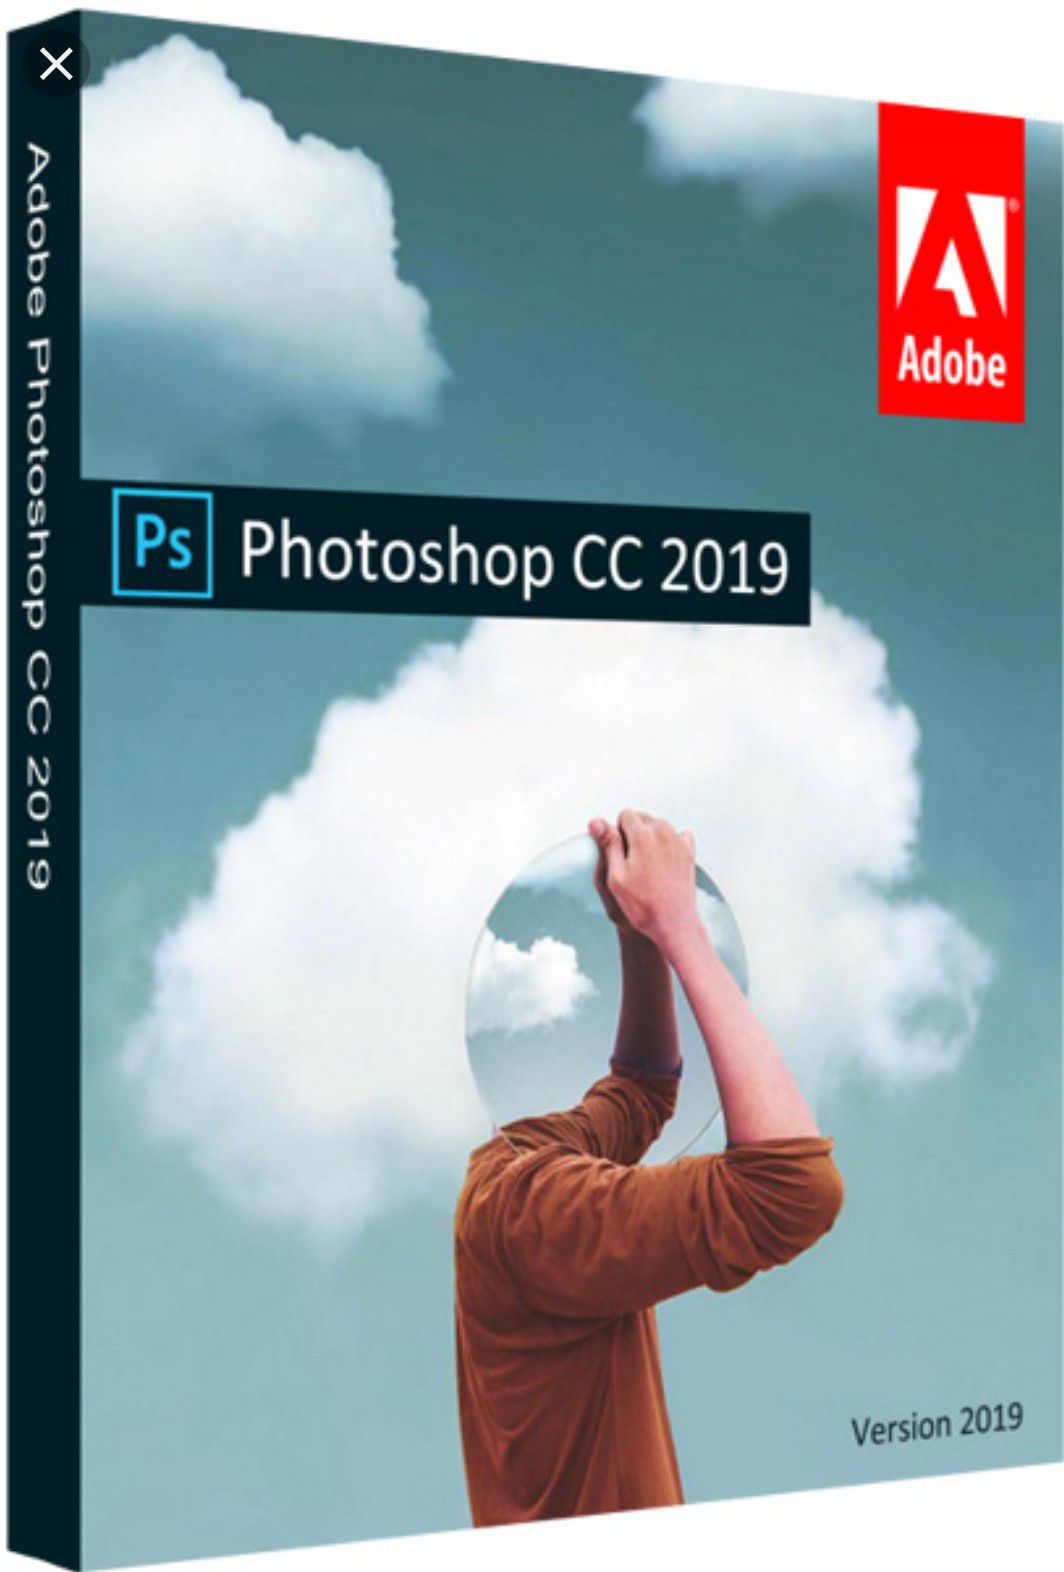 Adobe Photoshop 2019